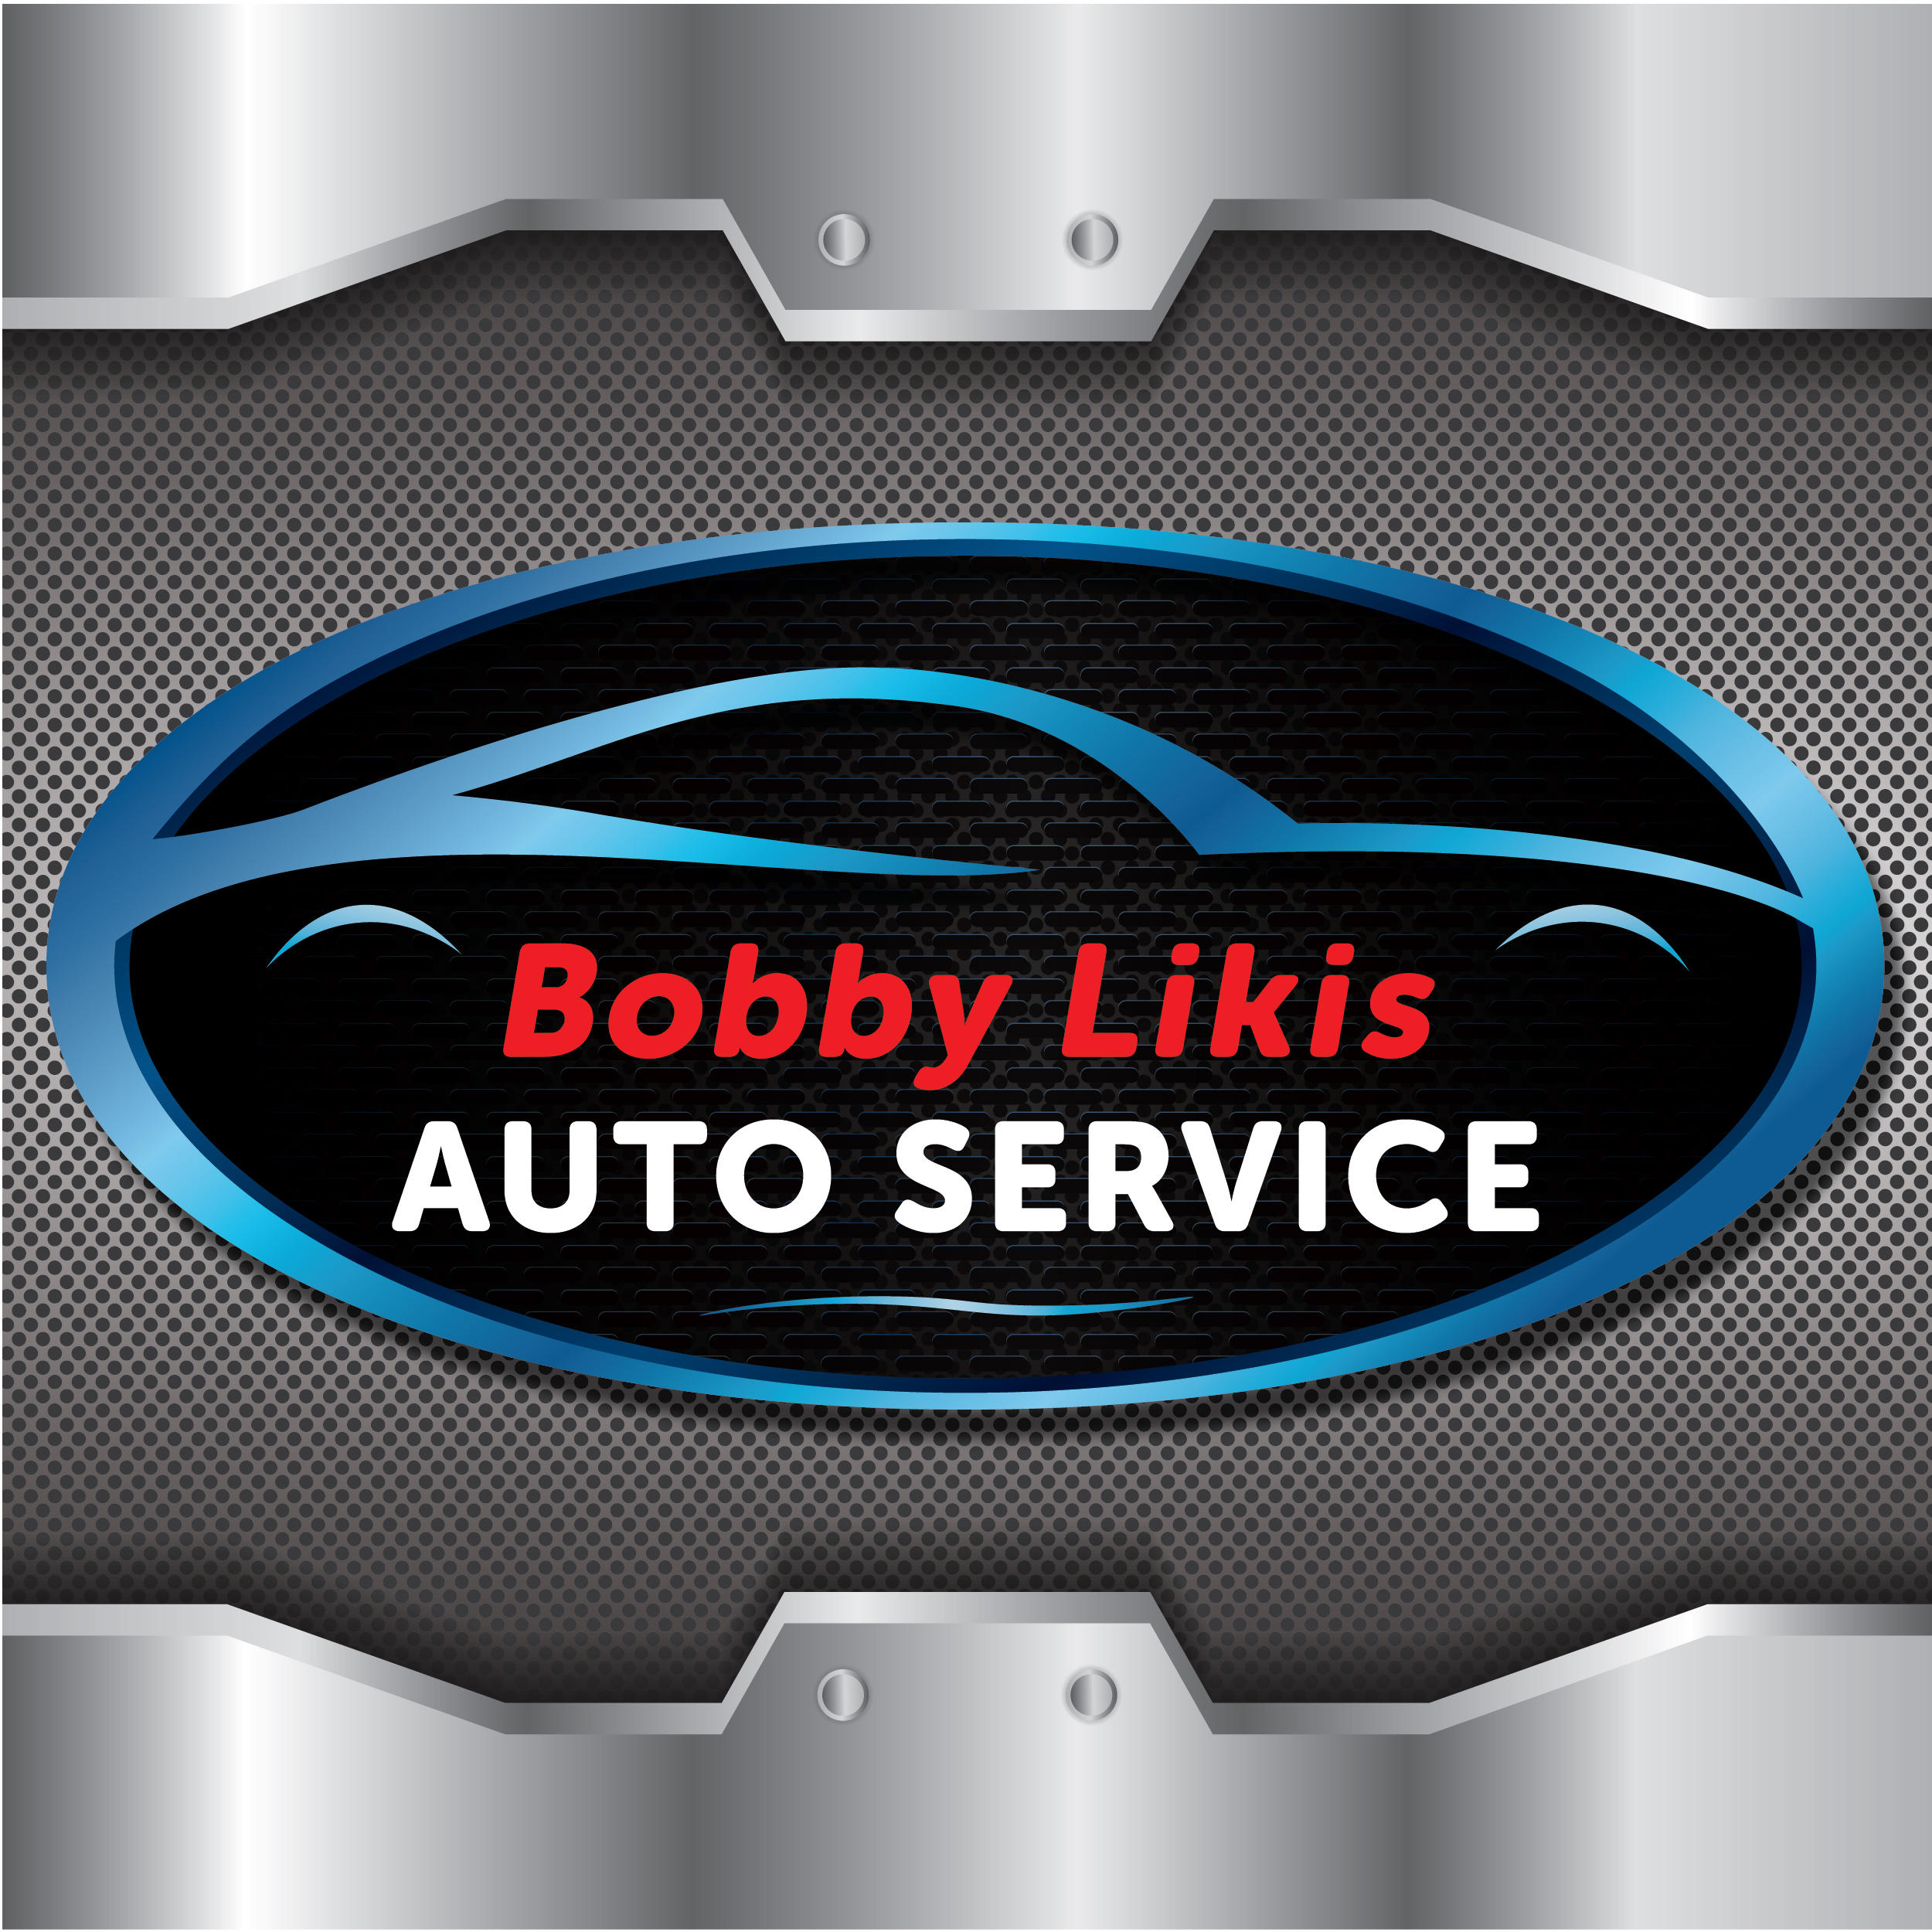 Bobby Likis Auto Service Photo